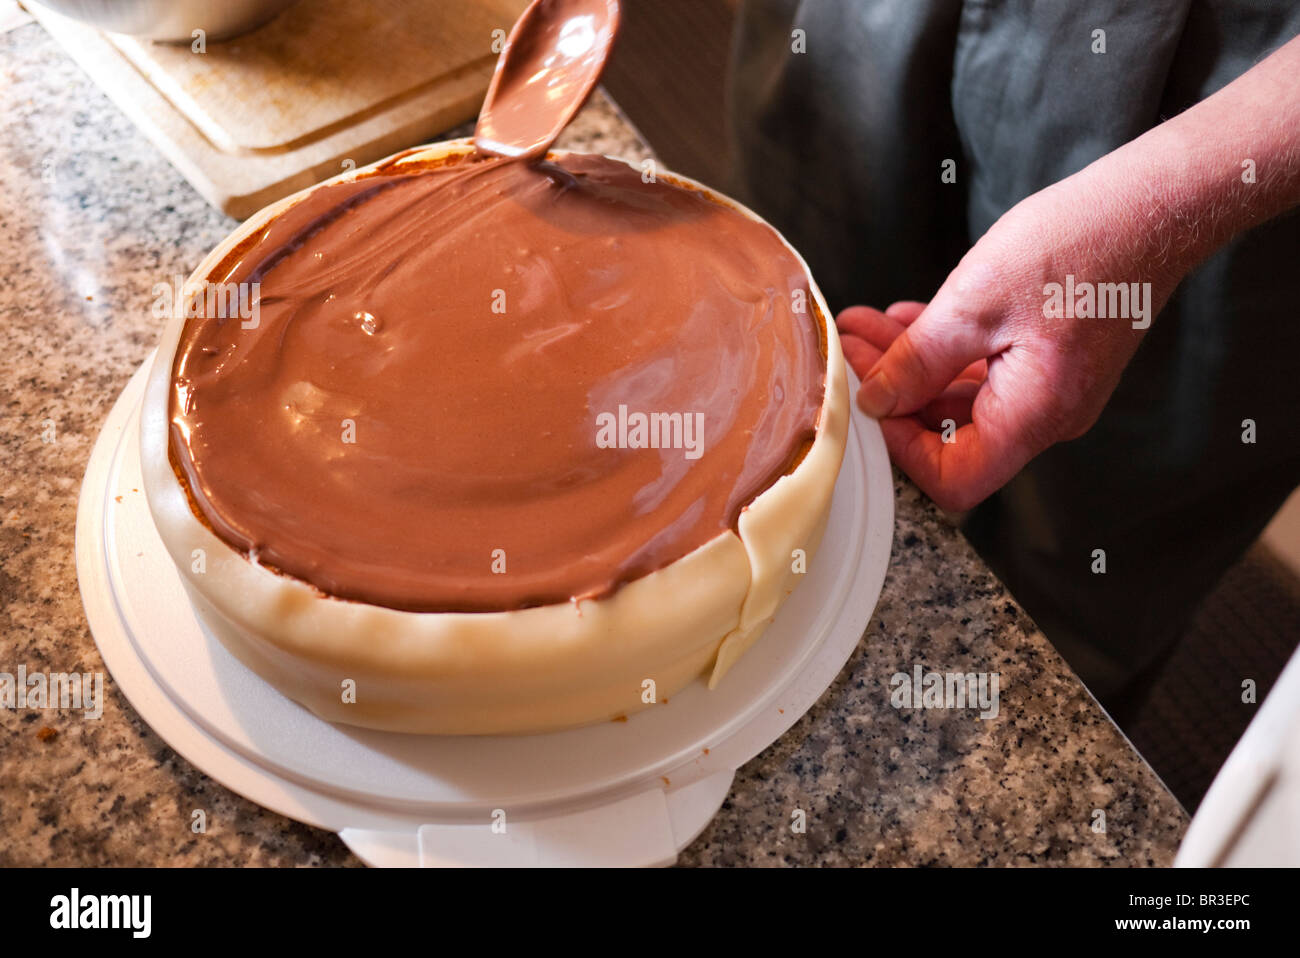 Chef making a birthday cake Stock Photo